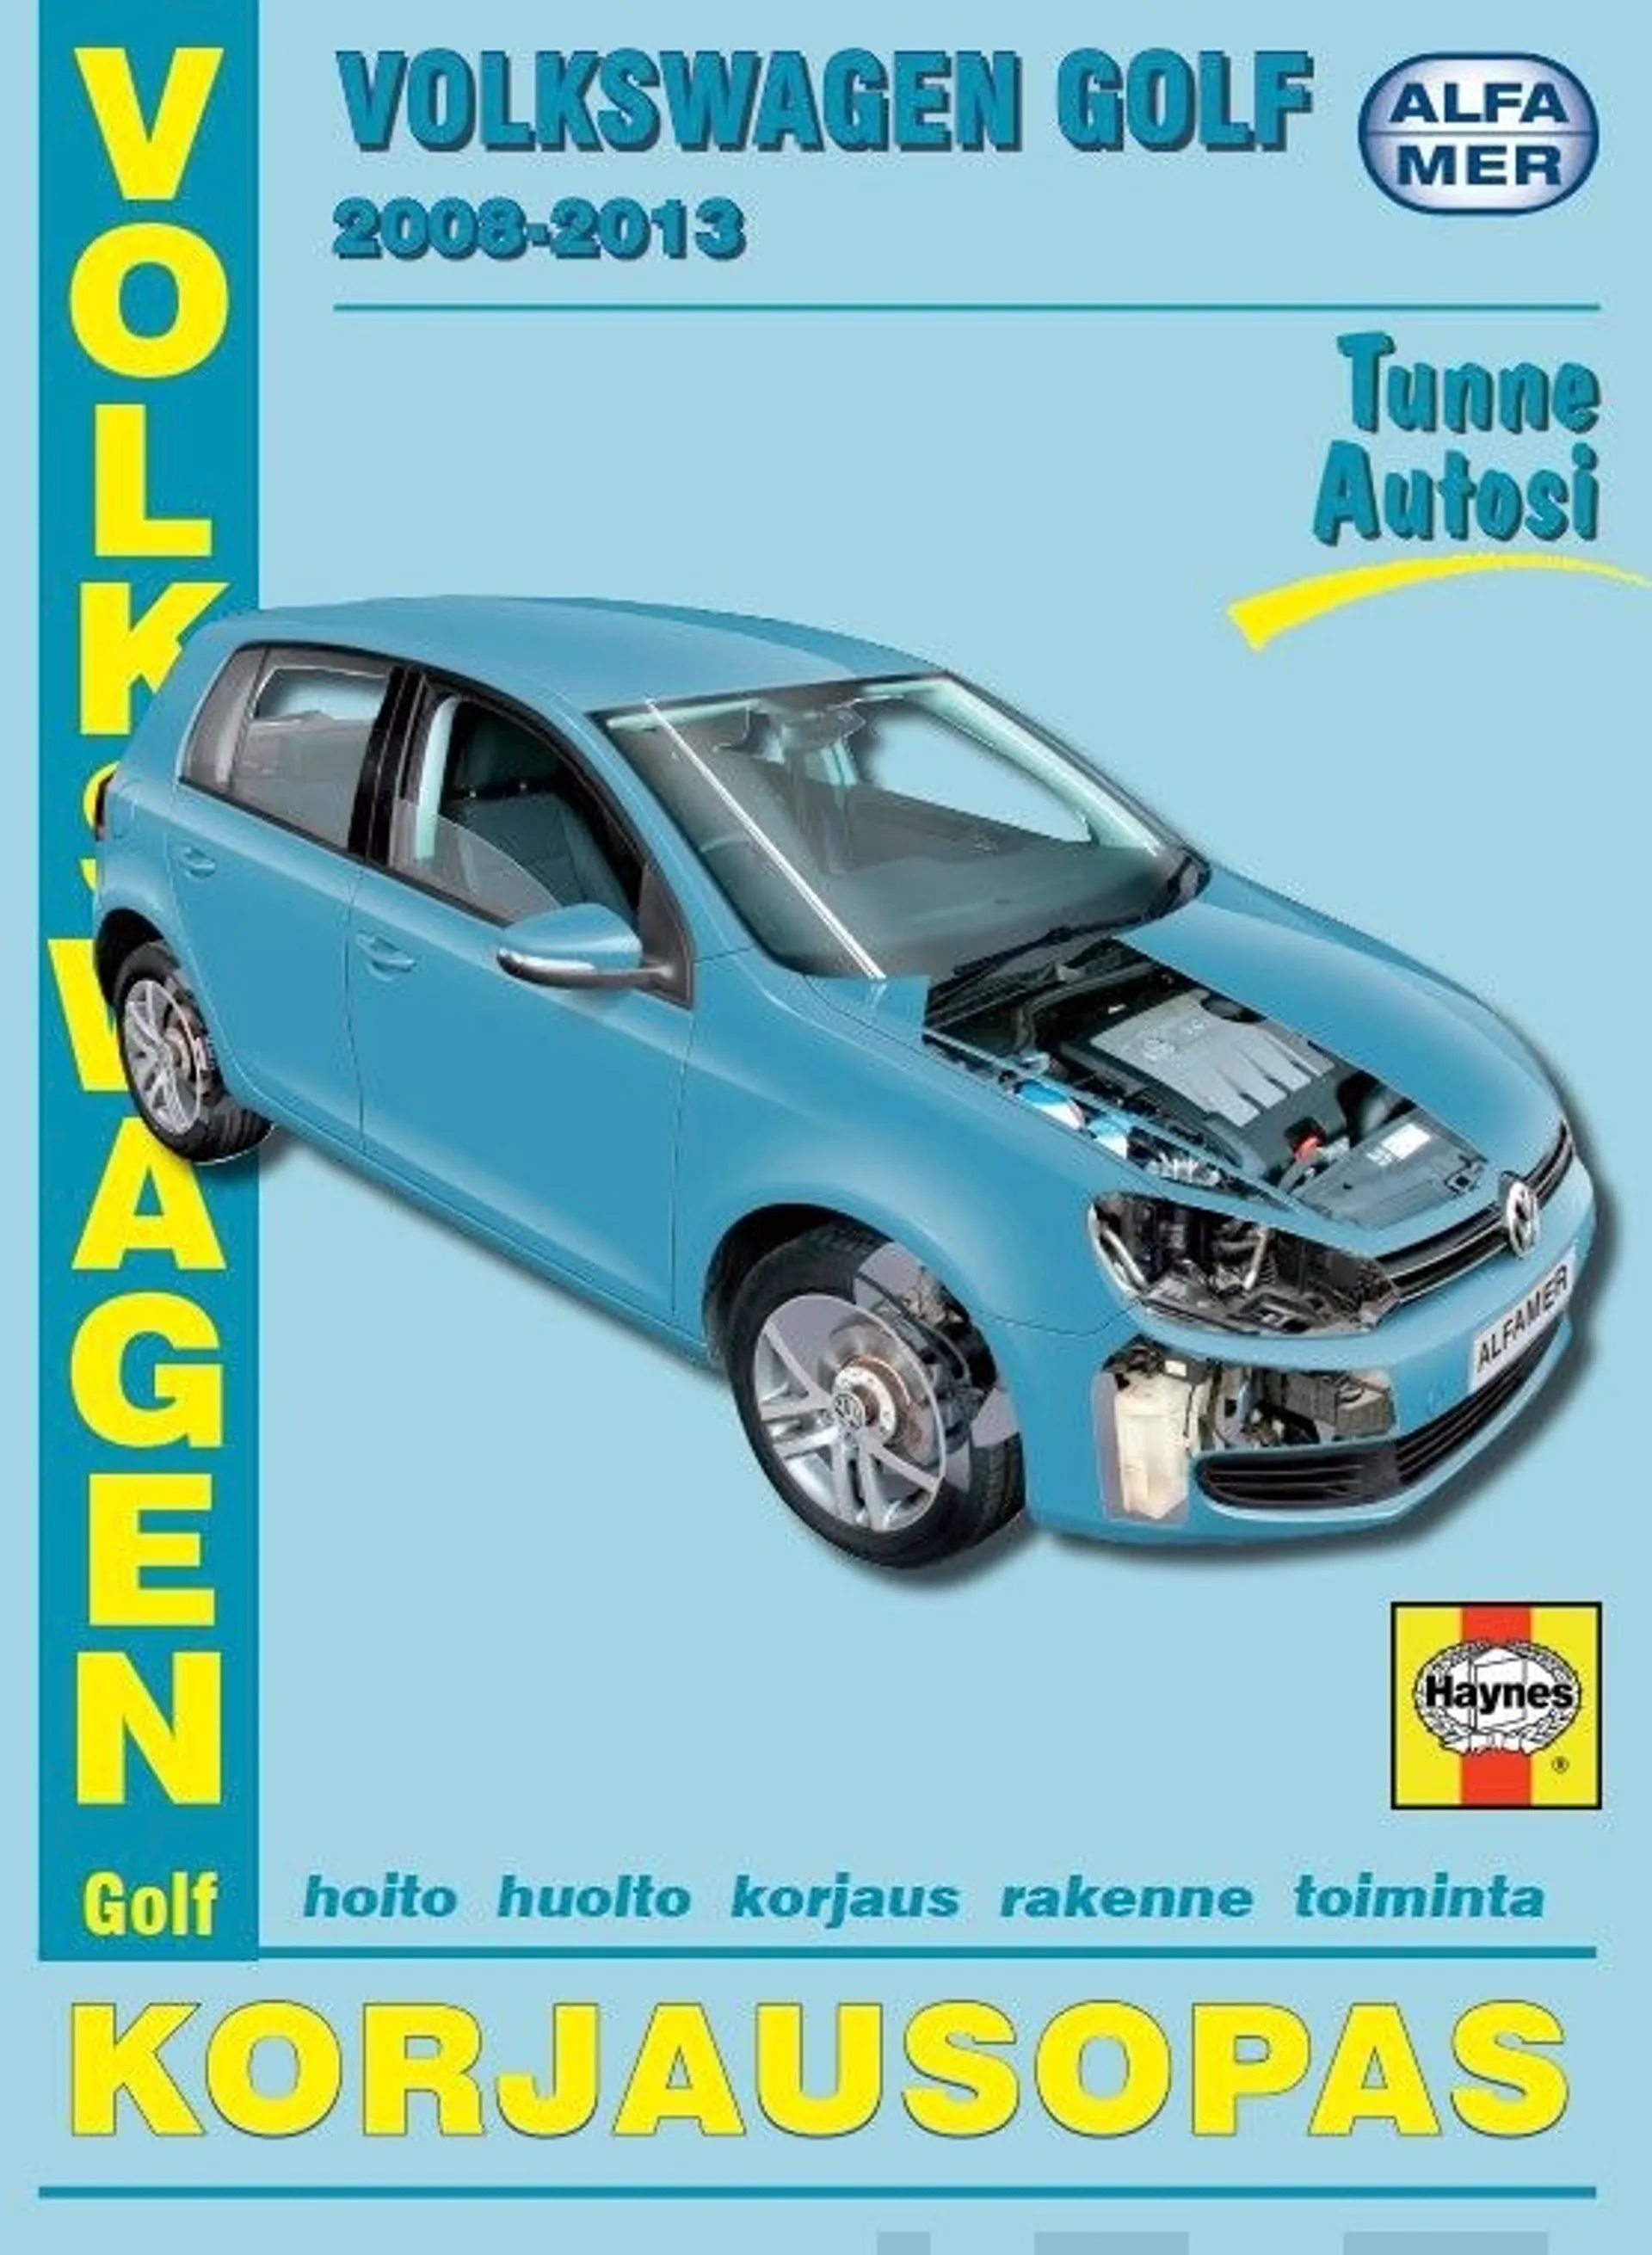 Esko, Volkswagen Golf 2008-2013